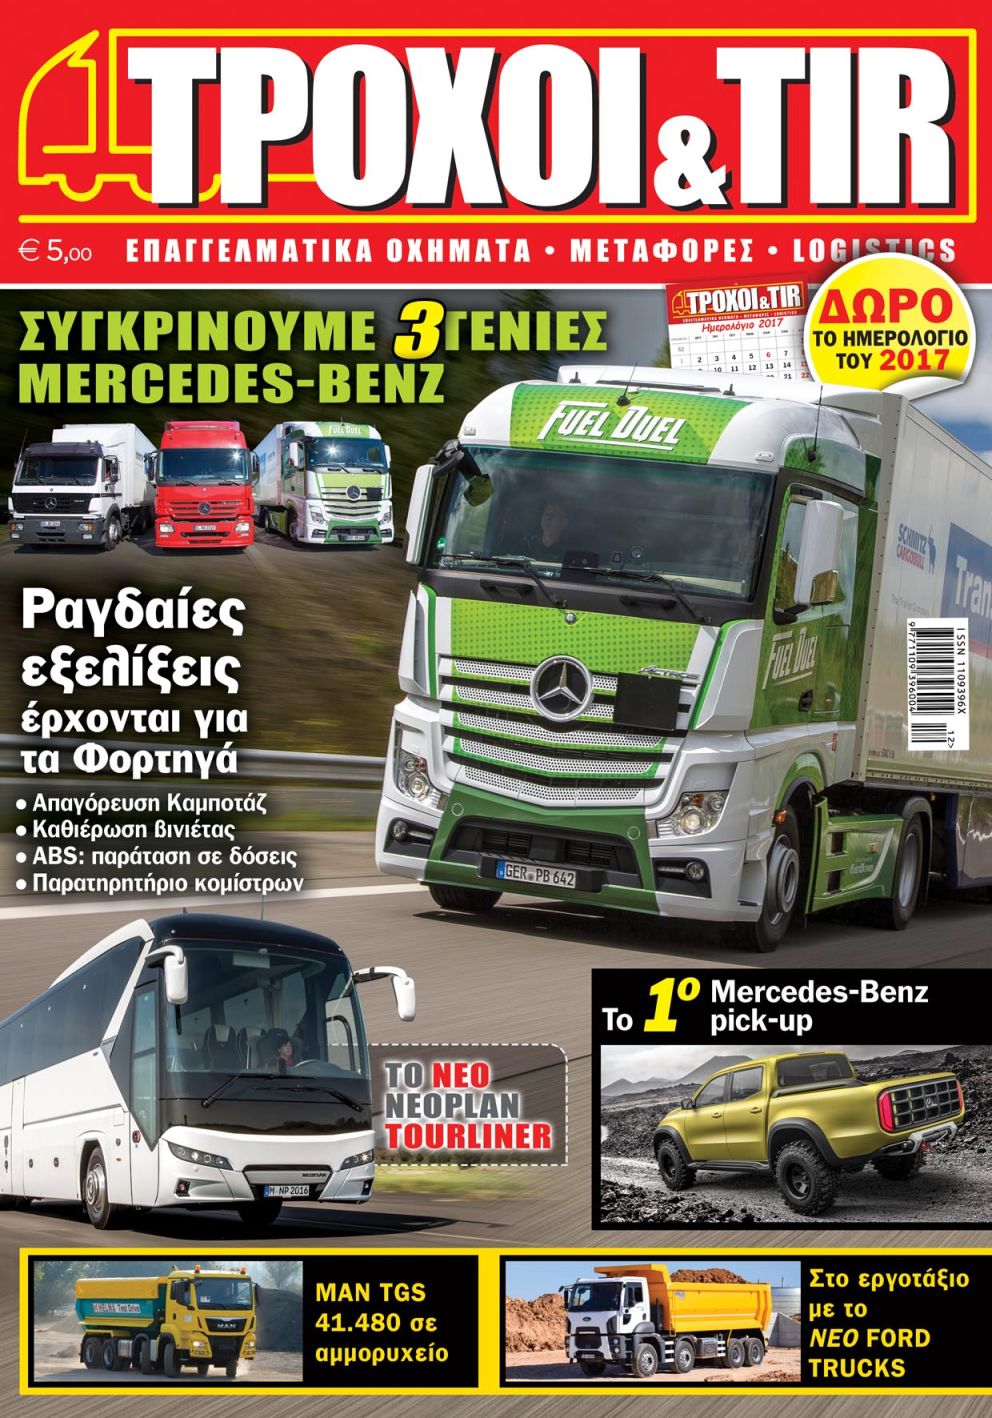 Troxoikaitir issue 344 december 2016 cover